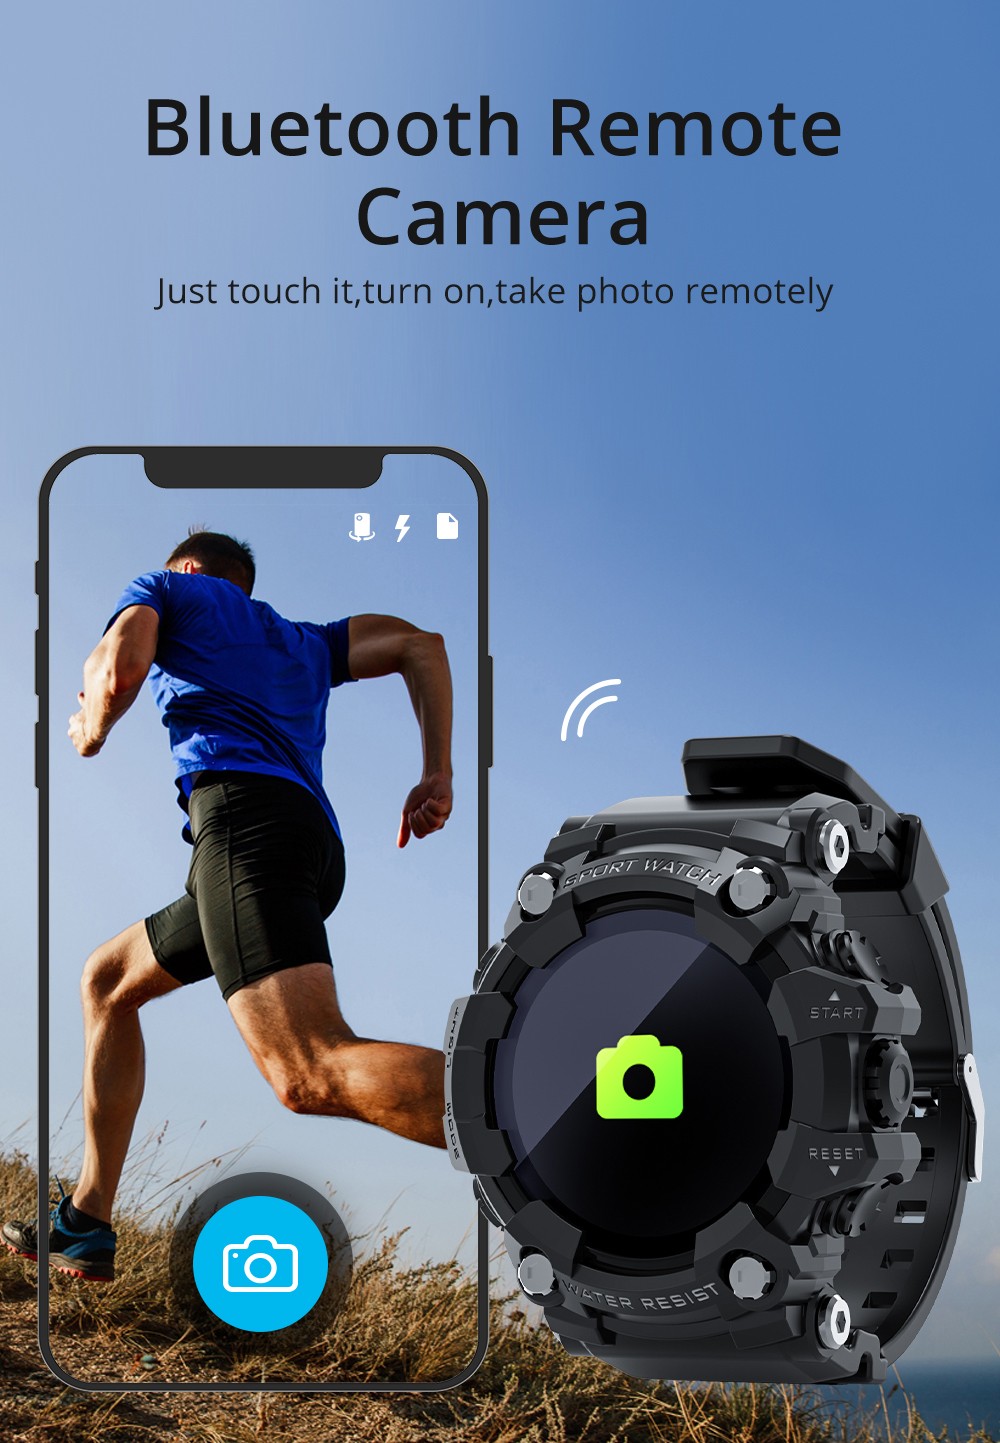 LOKMAT ATTACK Bluetooth Smartwatch 1.28 นิ้วหน้าจอสัมผัส TFT อัตราการเต้นหัวใจเครื่องวัดความดันโลหิต IP68 กันน้ำได้ 25 วันเวลาสแตนด์บาย - สีดำ